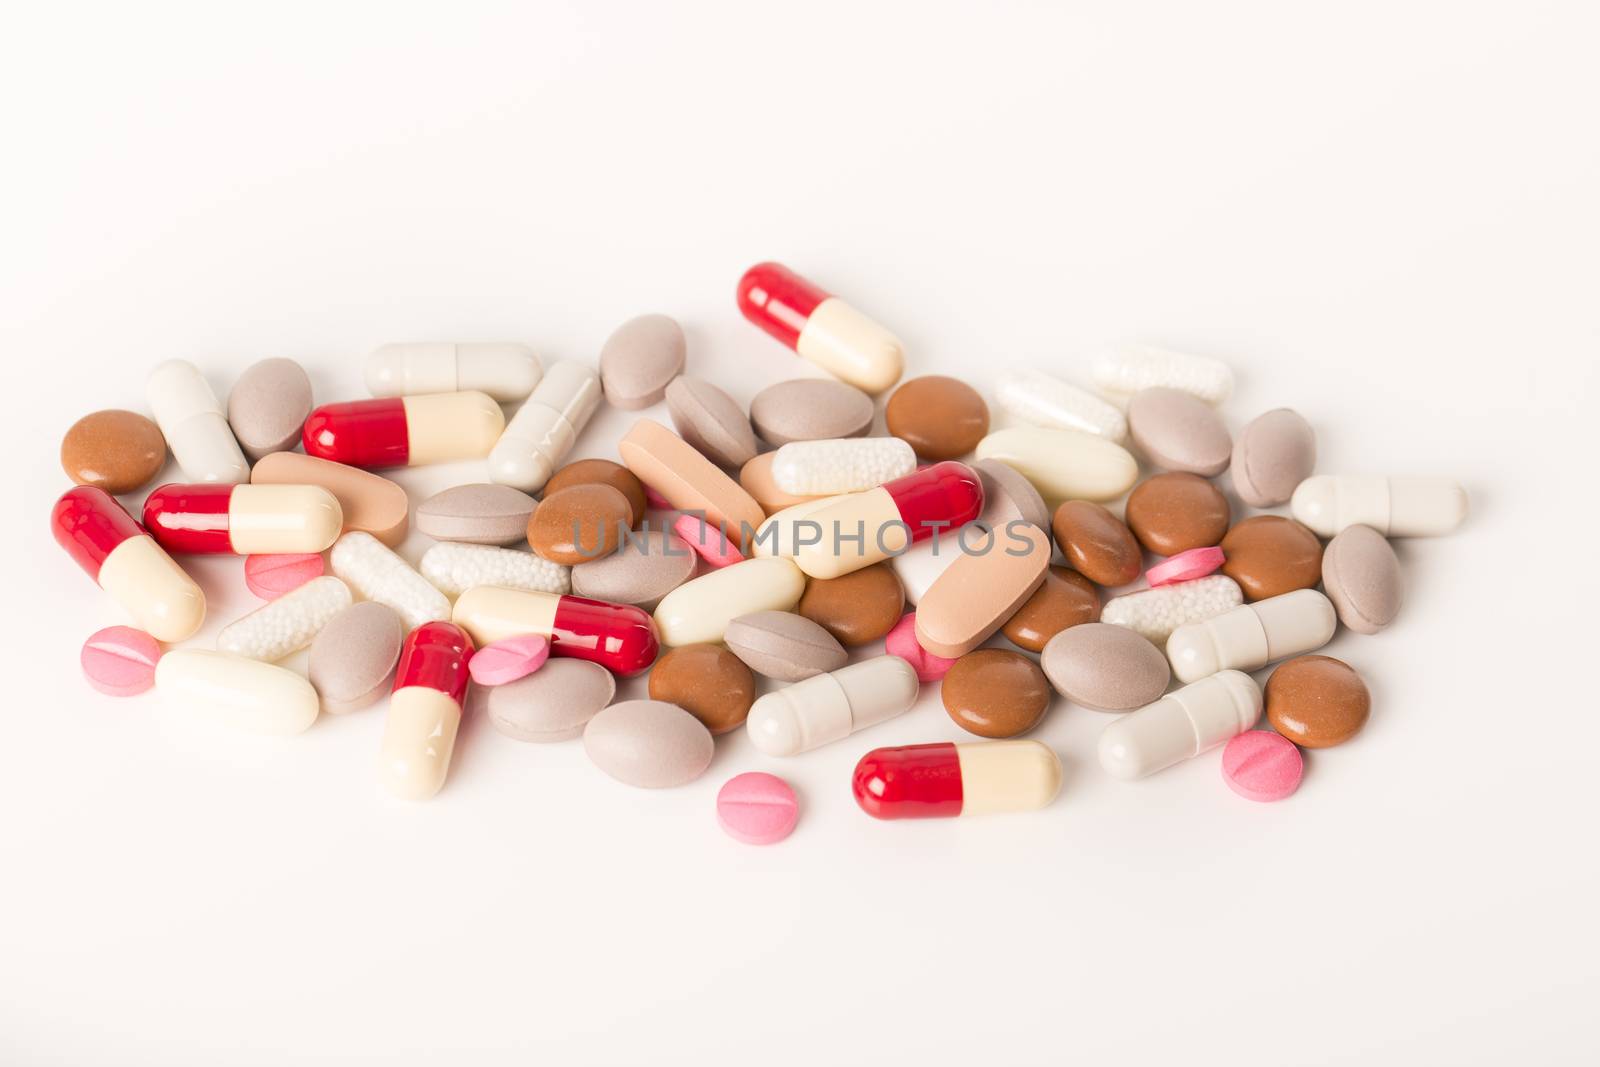 over medication medicine drugs pills abuse dependency